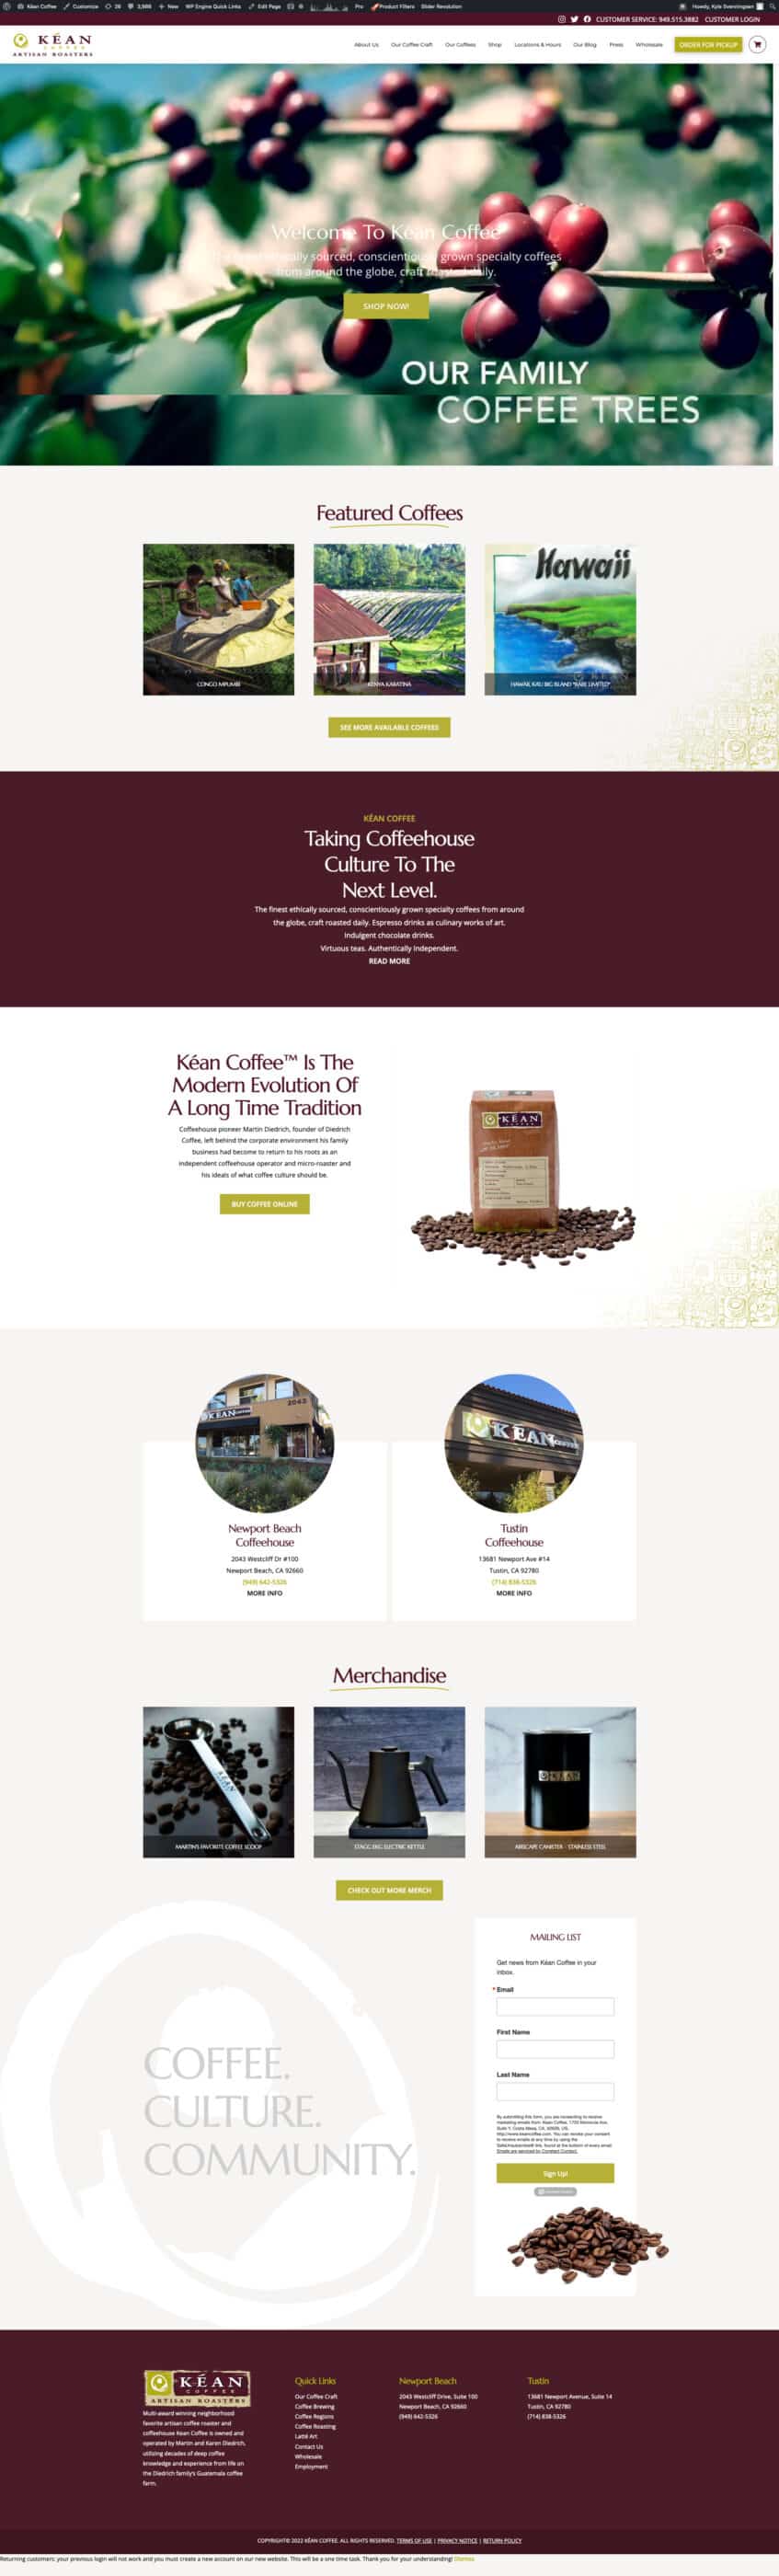 Kéan Coffee Homepage showing ripe coffee fruit